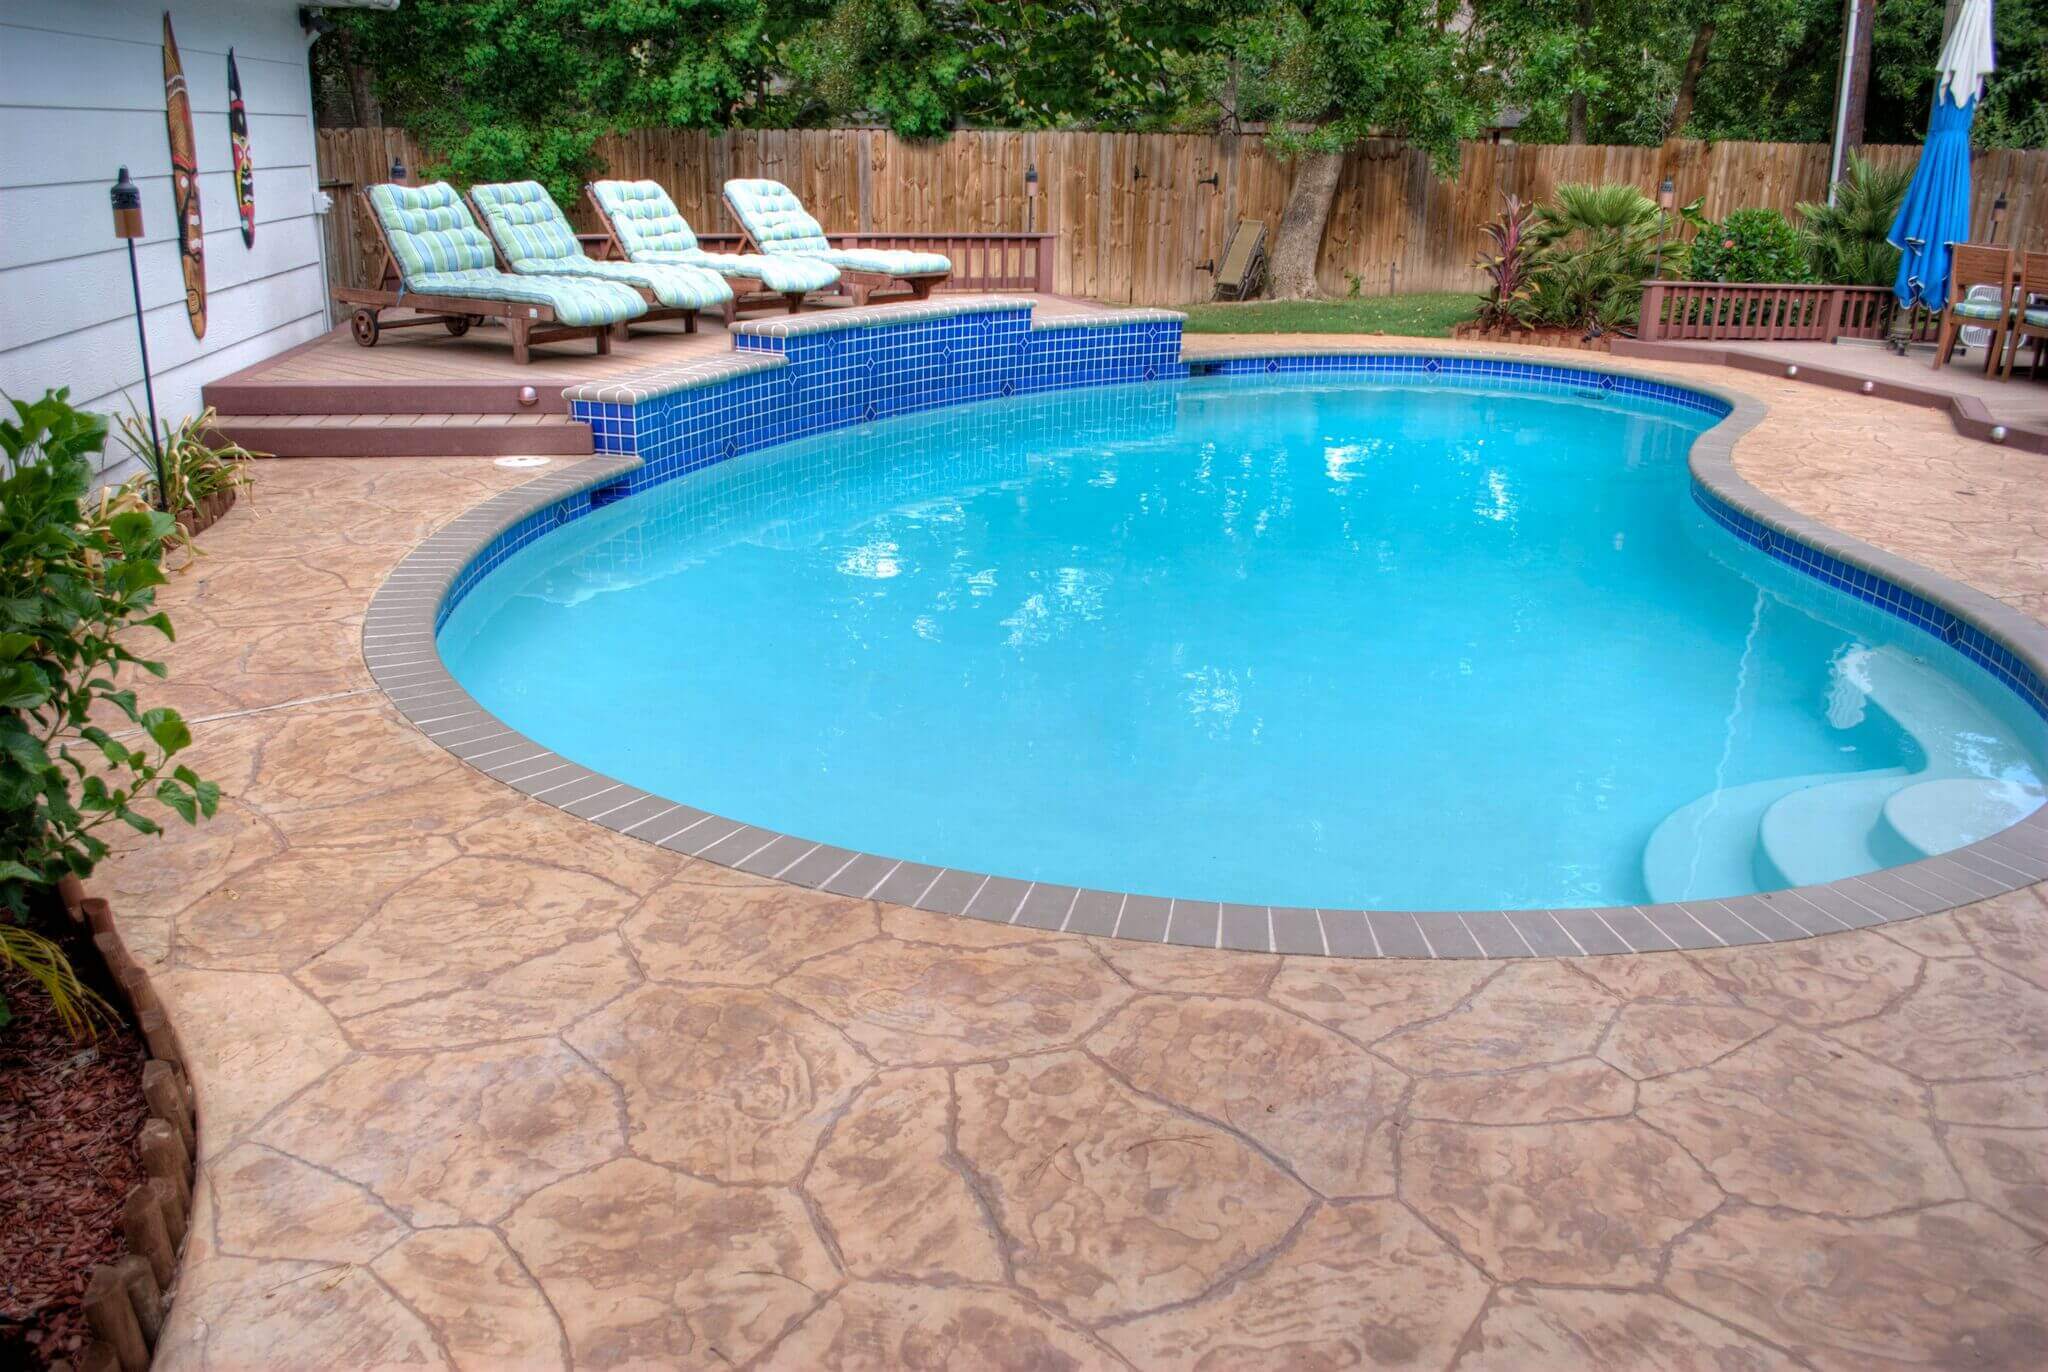 Decorative finish pool decks Dallas Texas backyard design idea